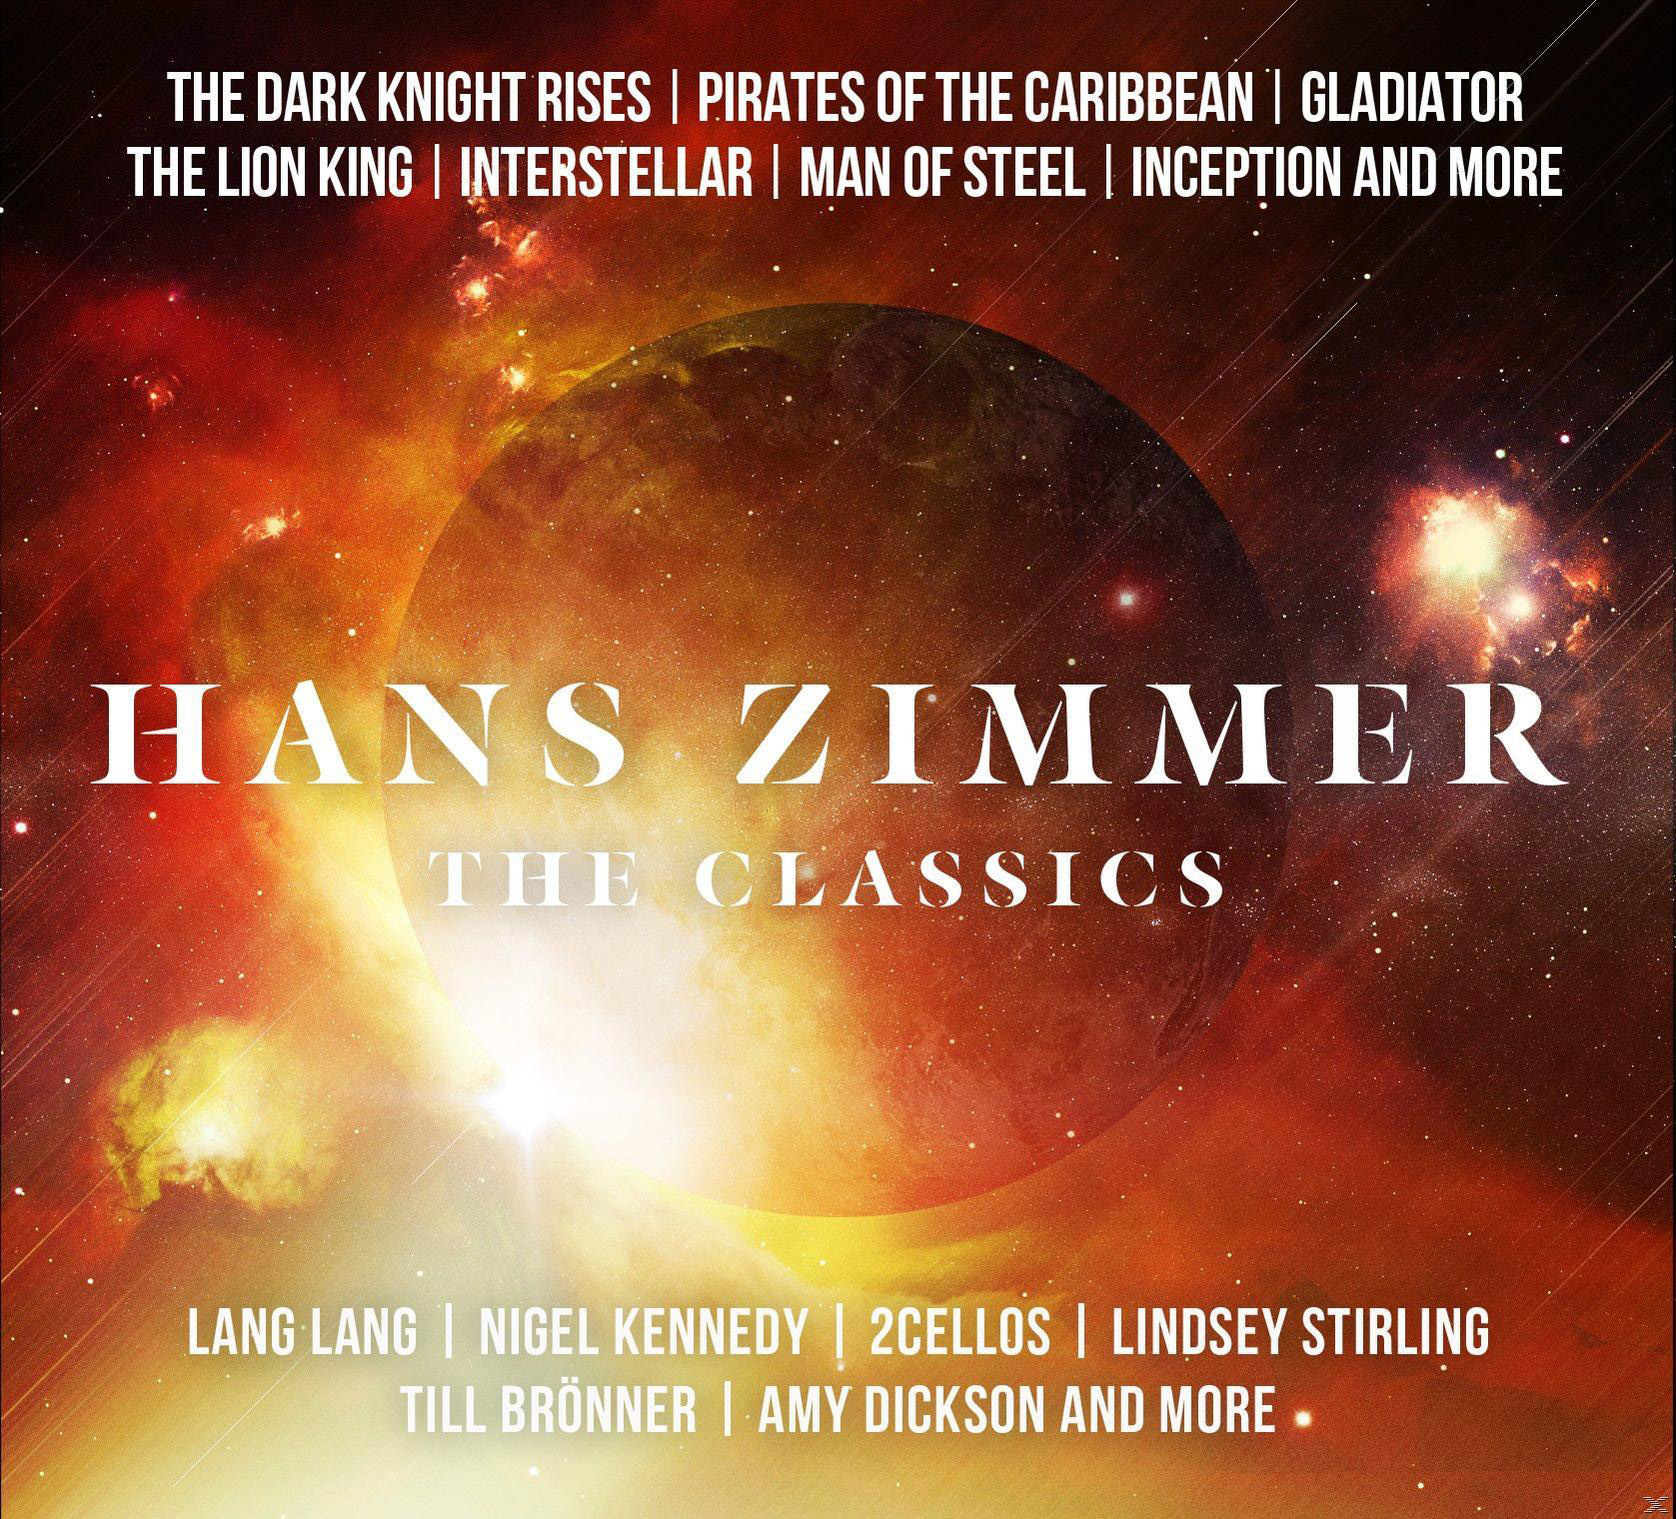 VARIOUS - Zimmer-The - Hans Classics (Vinyl)